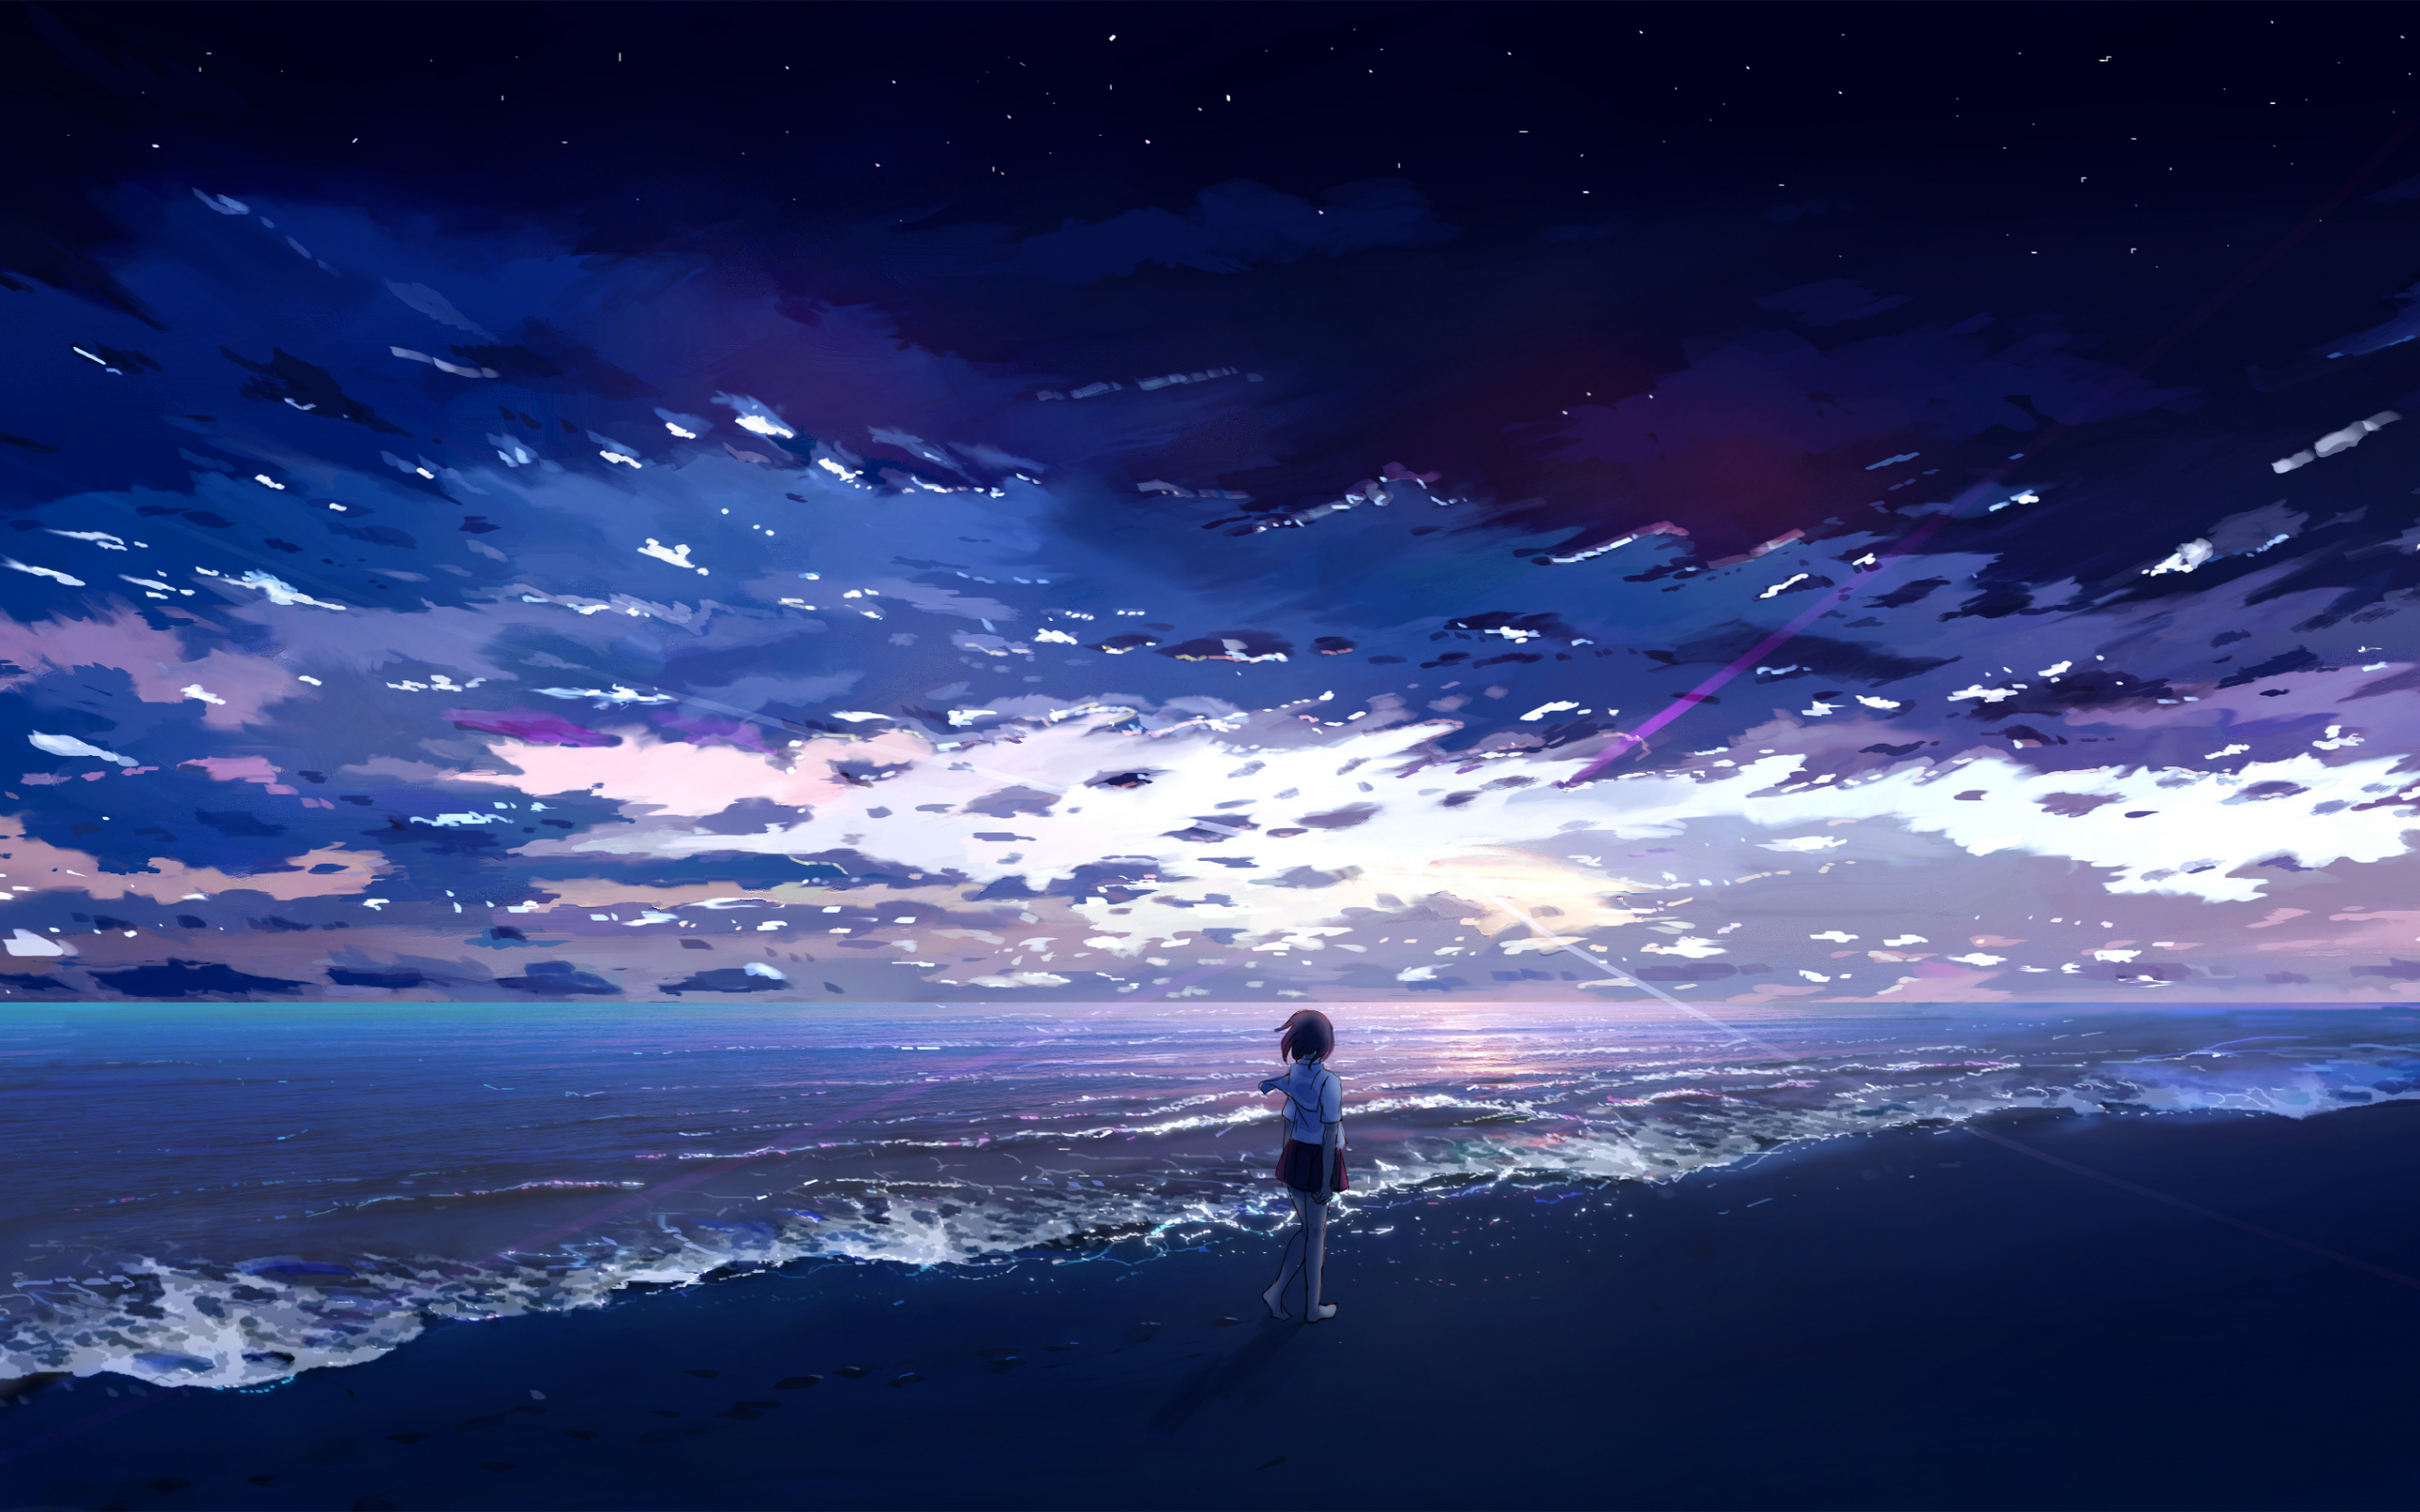 Download wallpaper 2560x1600 anime girl, seashore, beach, art, dual wide  16:10 2560x1600 hd background, 22655